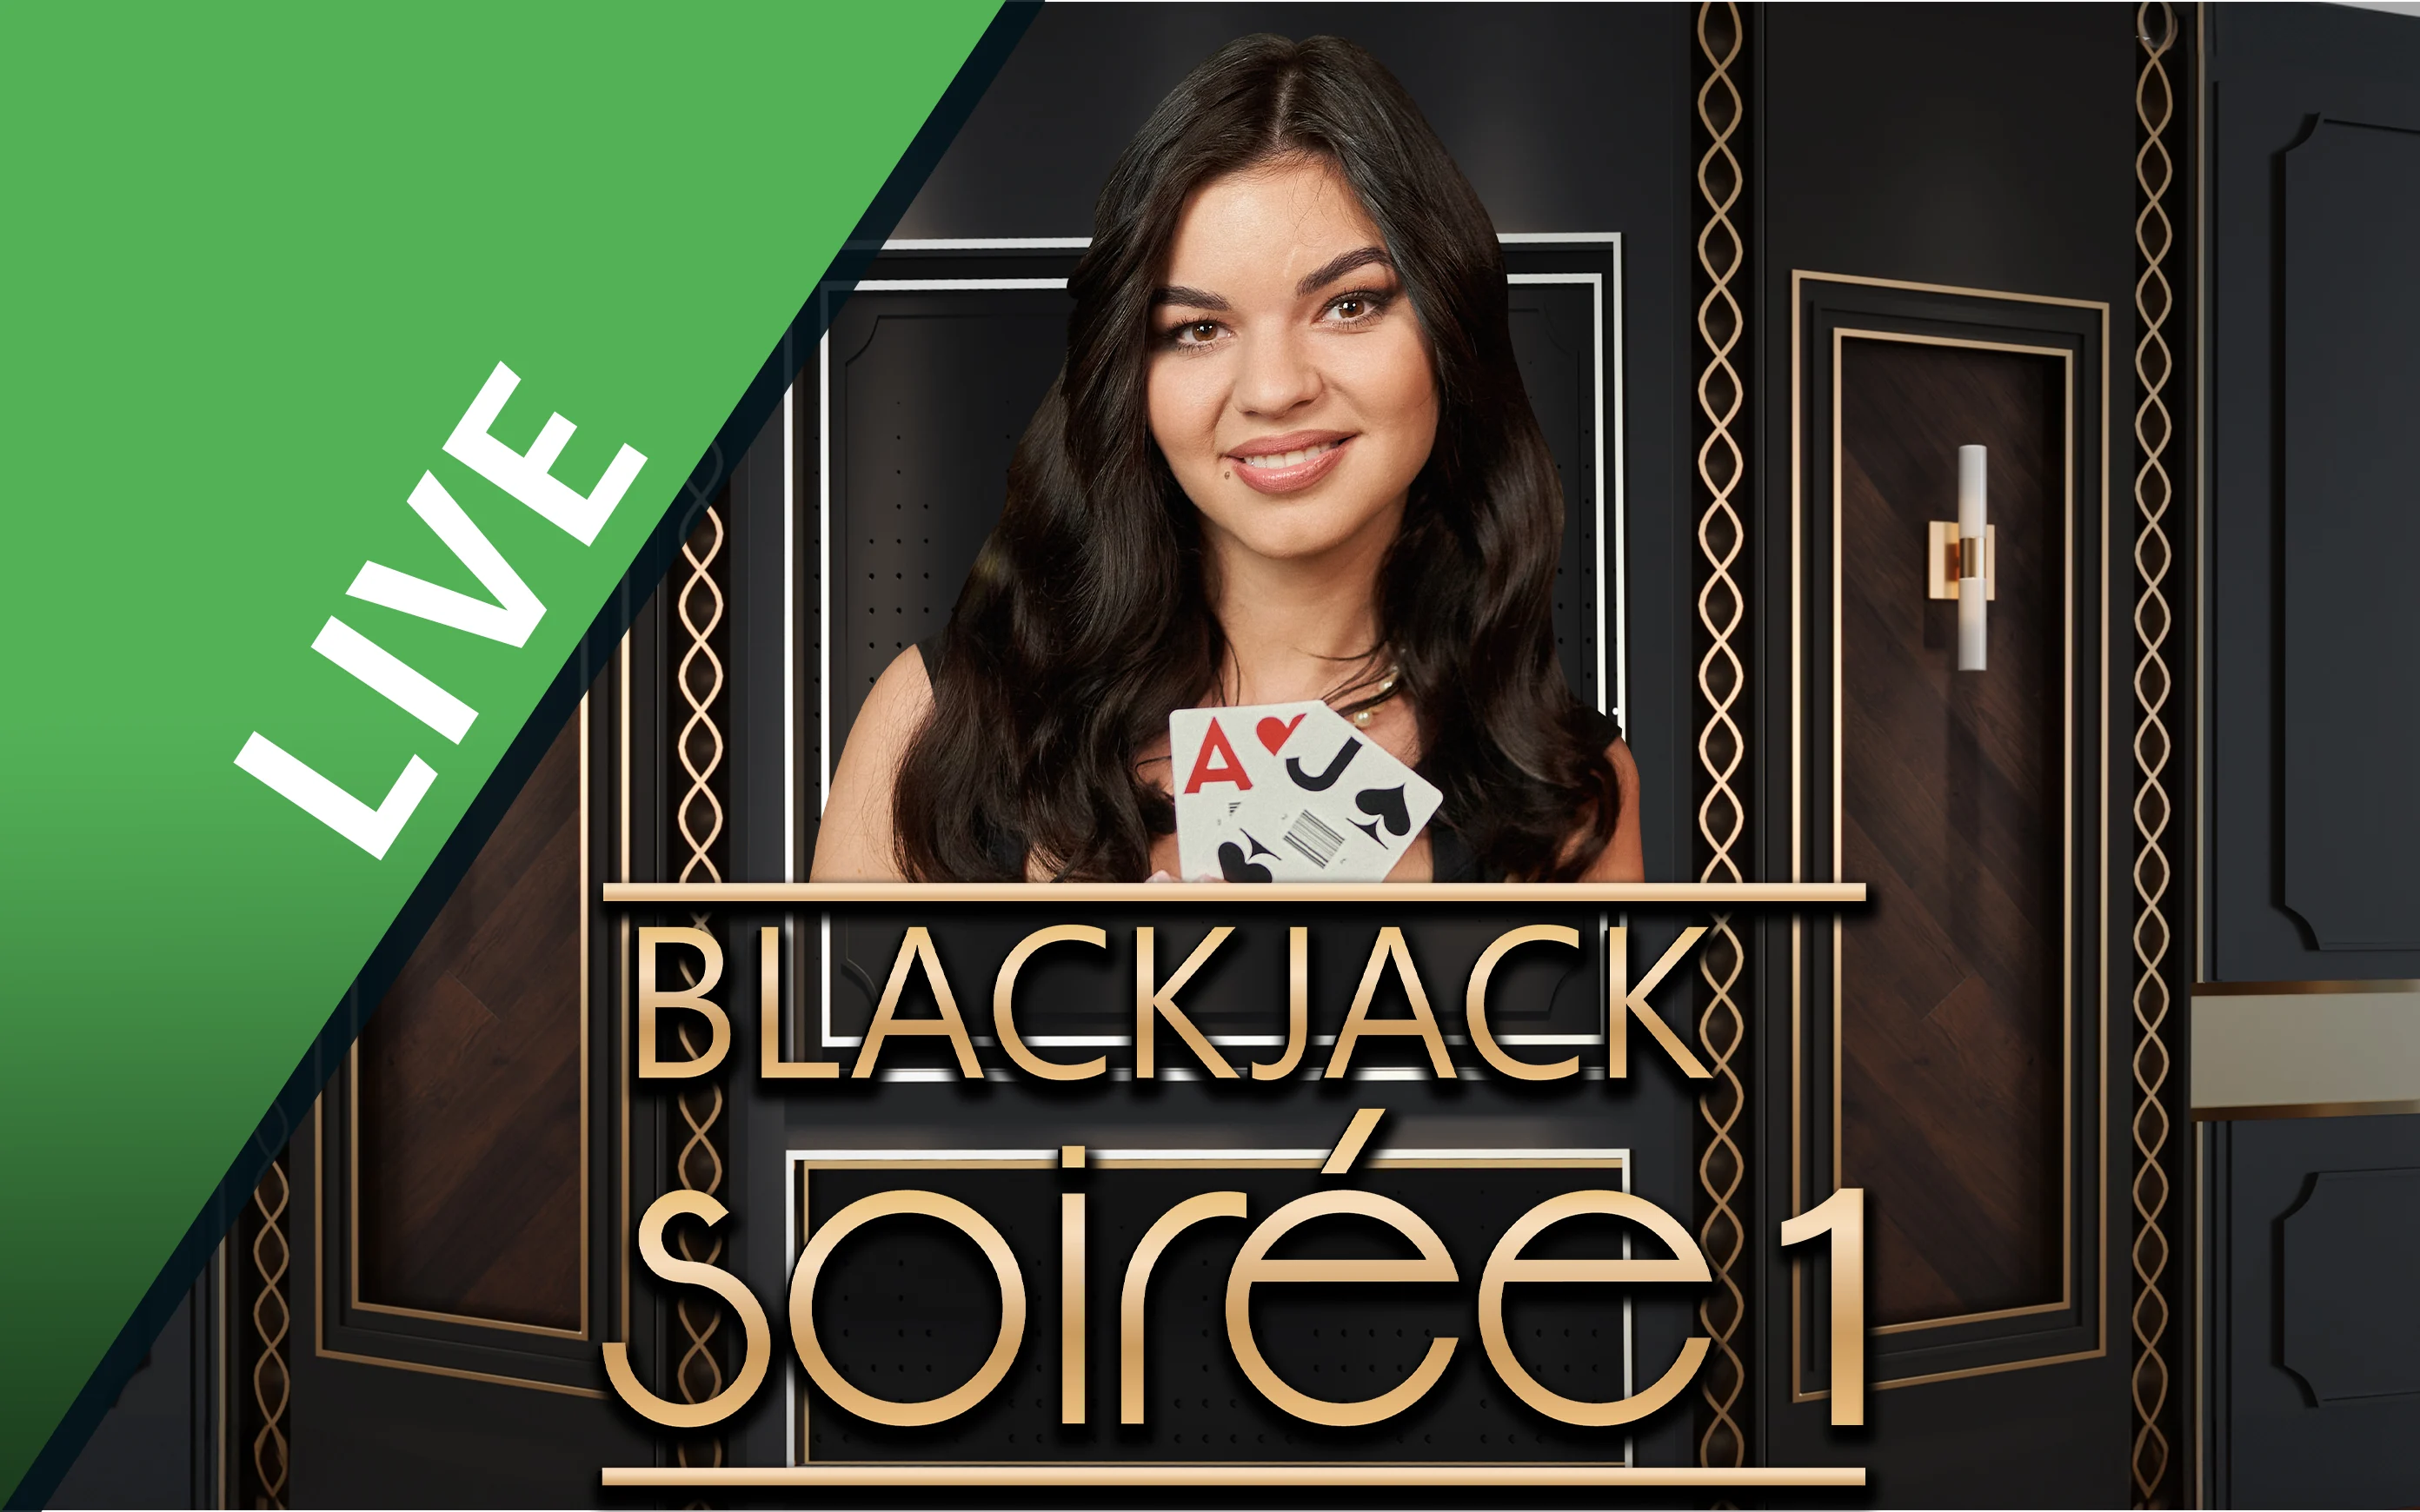 Play Blackjack Soirée 1 on Starcasino.be online casino